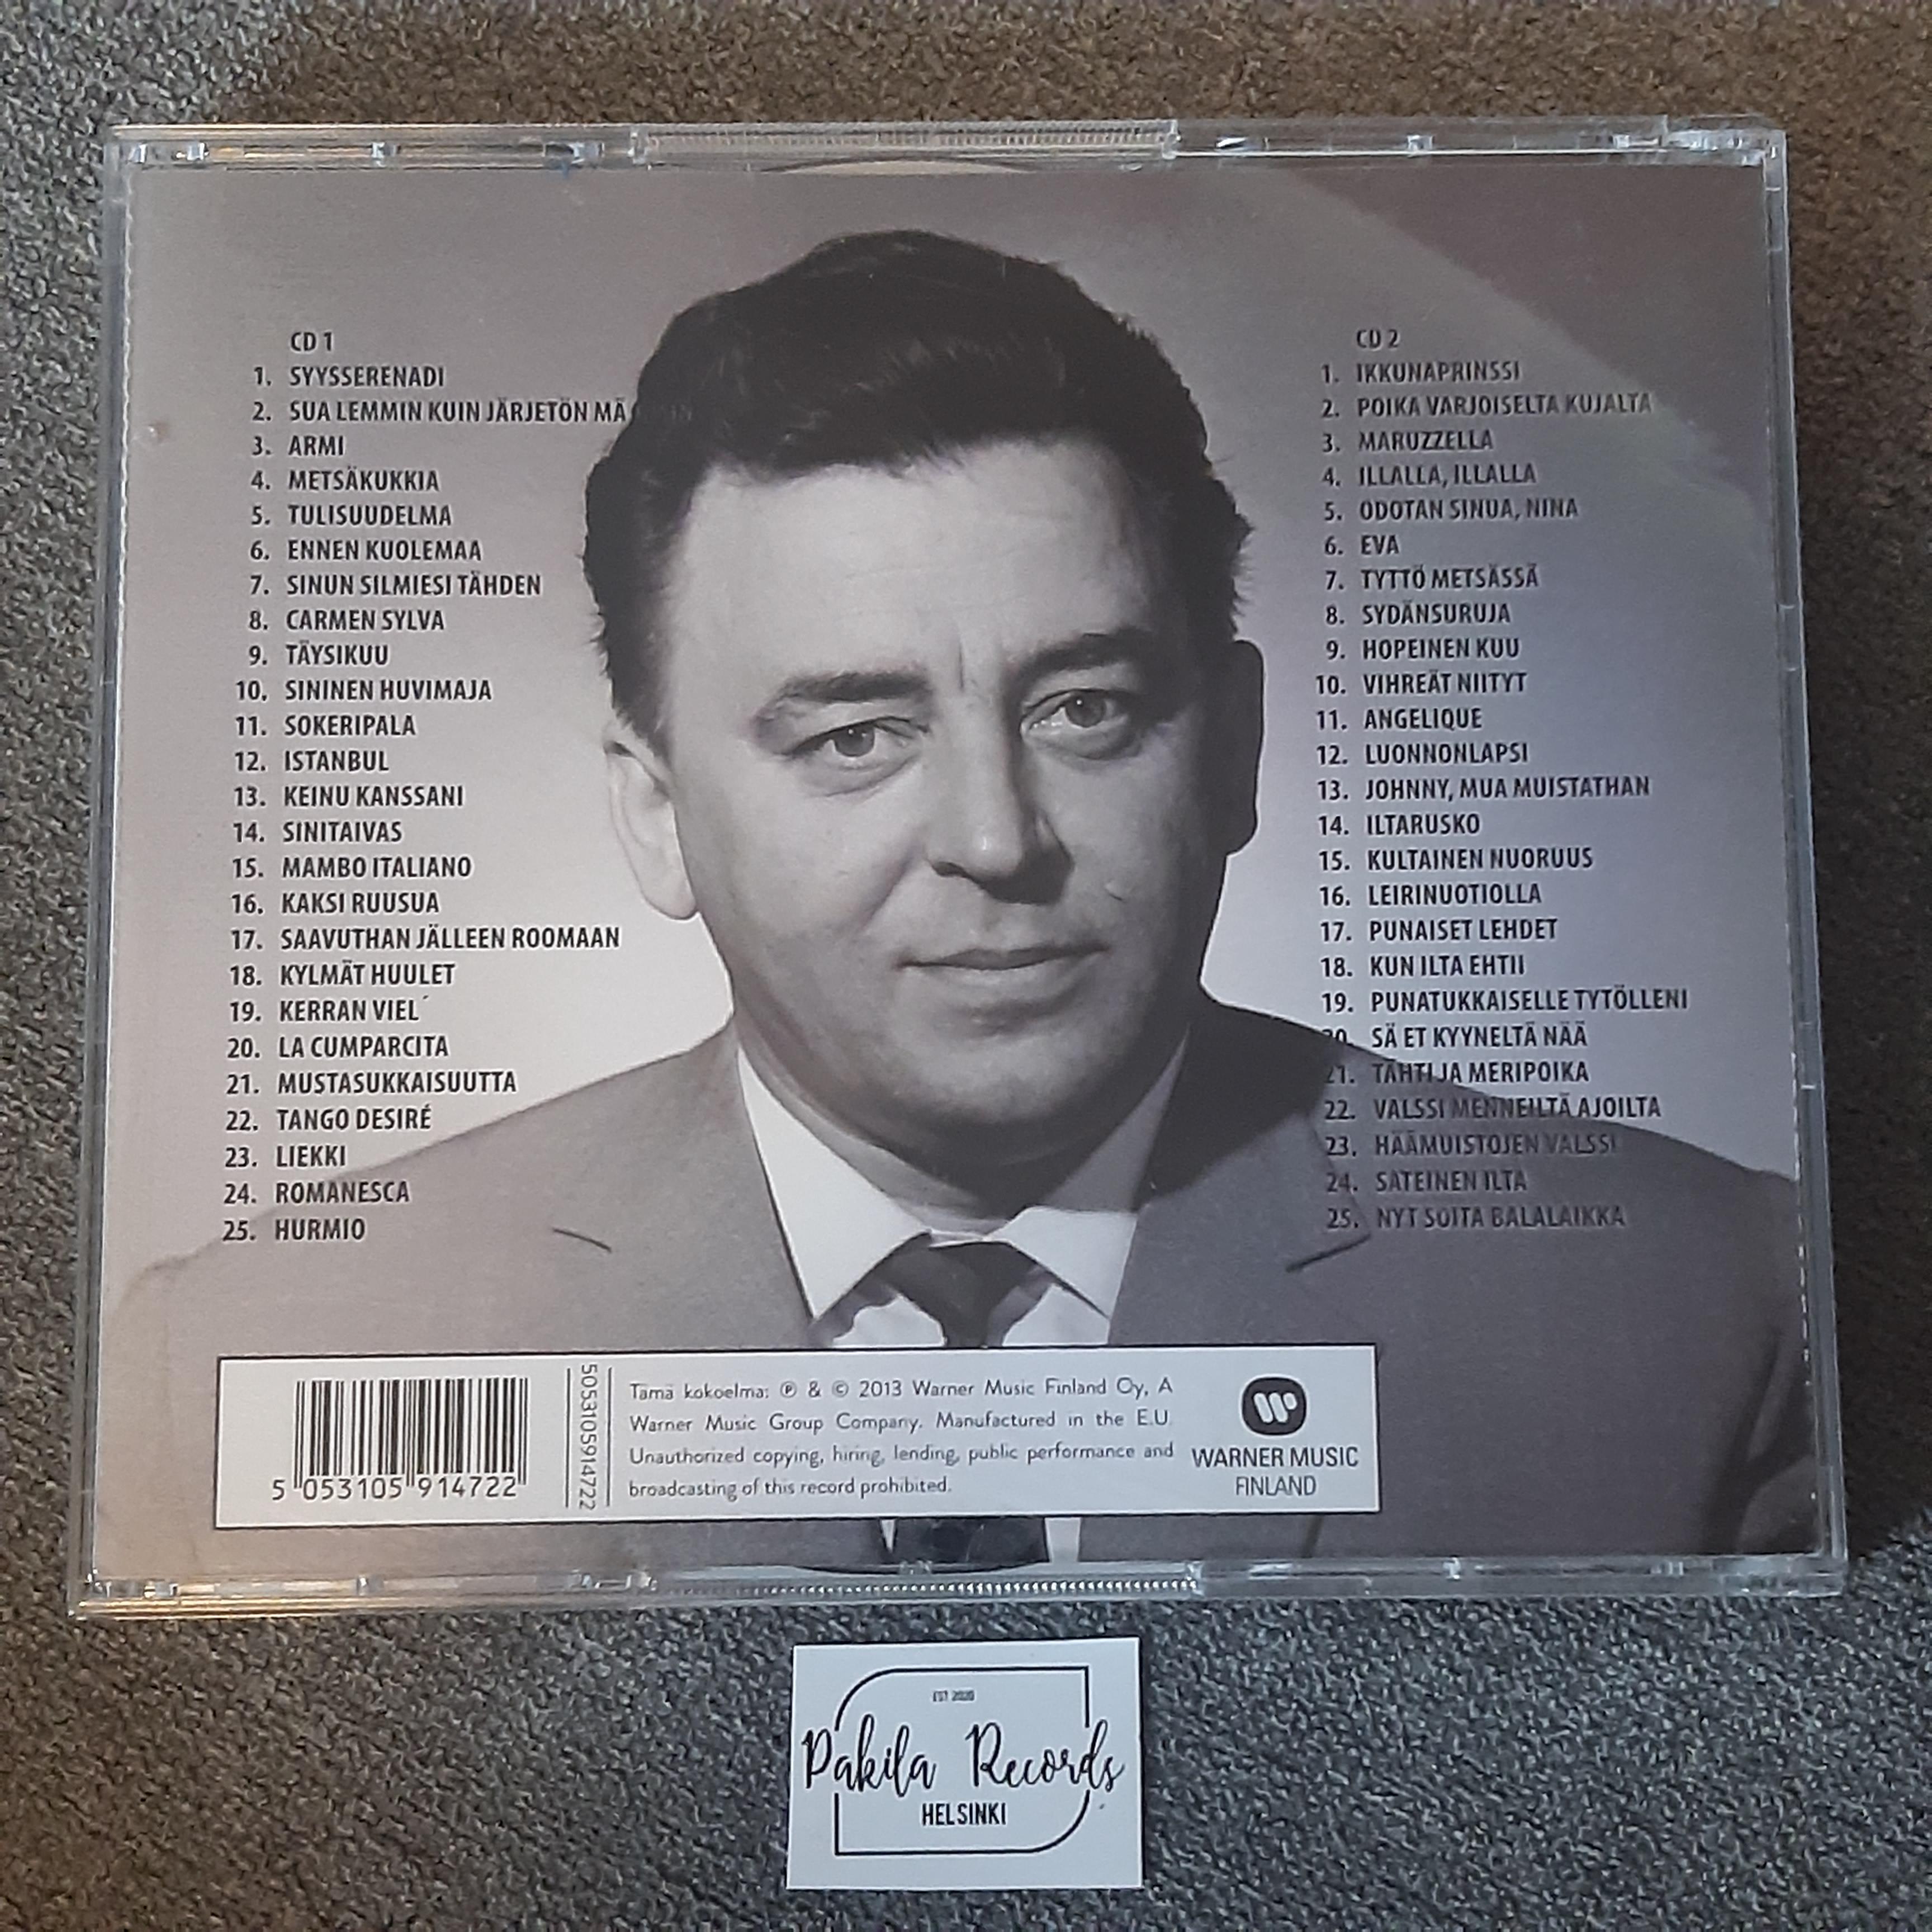 Olavi Virta - Laulaja - 2 CD (käytetty)